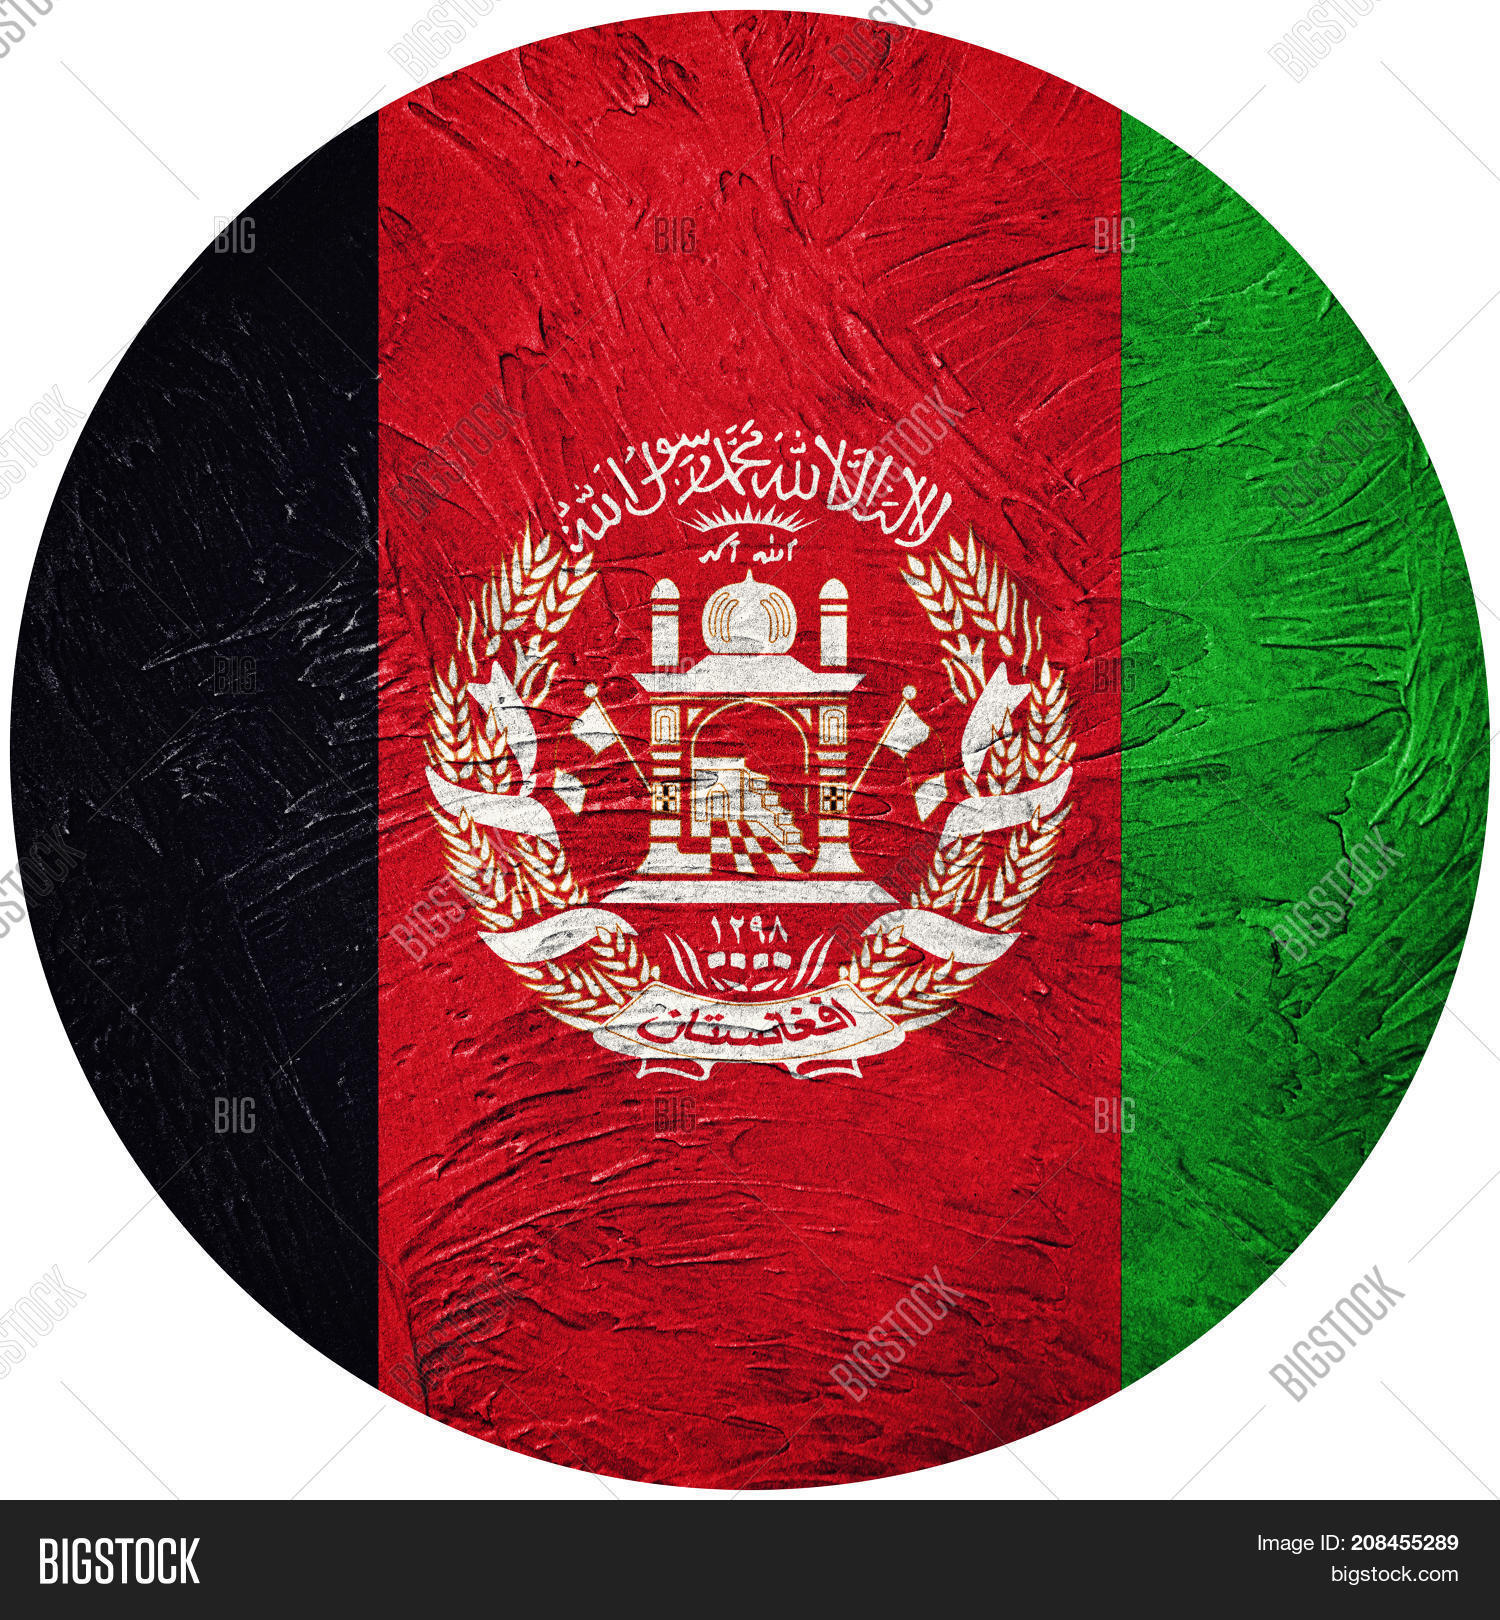 Grunge Afghanistan Flag. Image & Photo | Bigstock